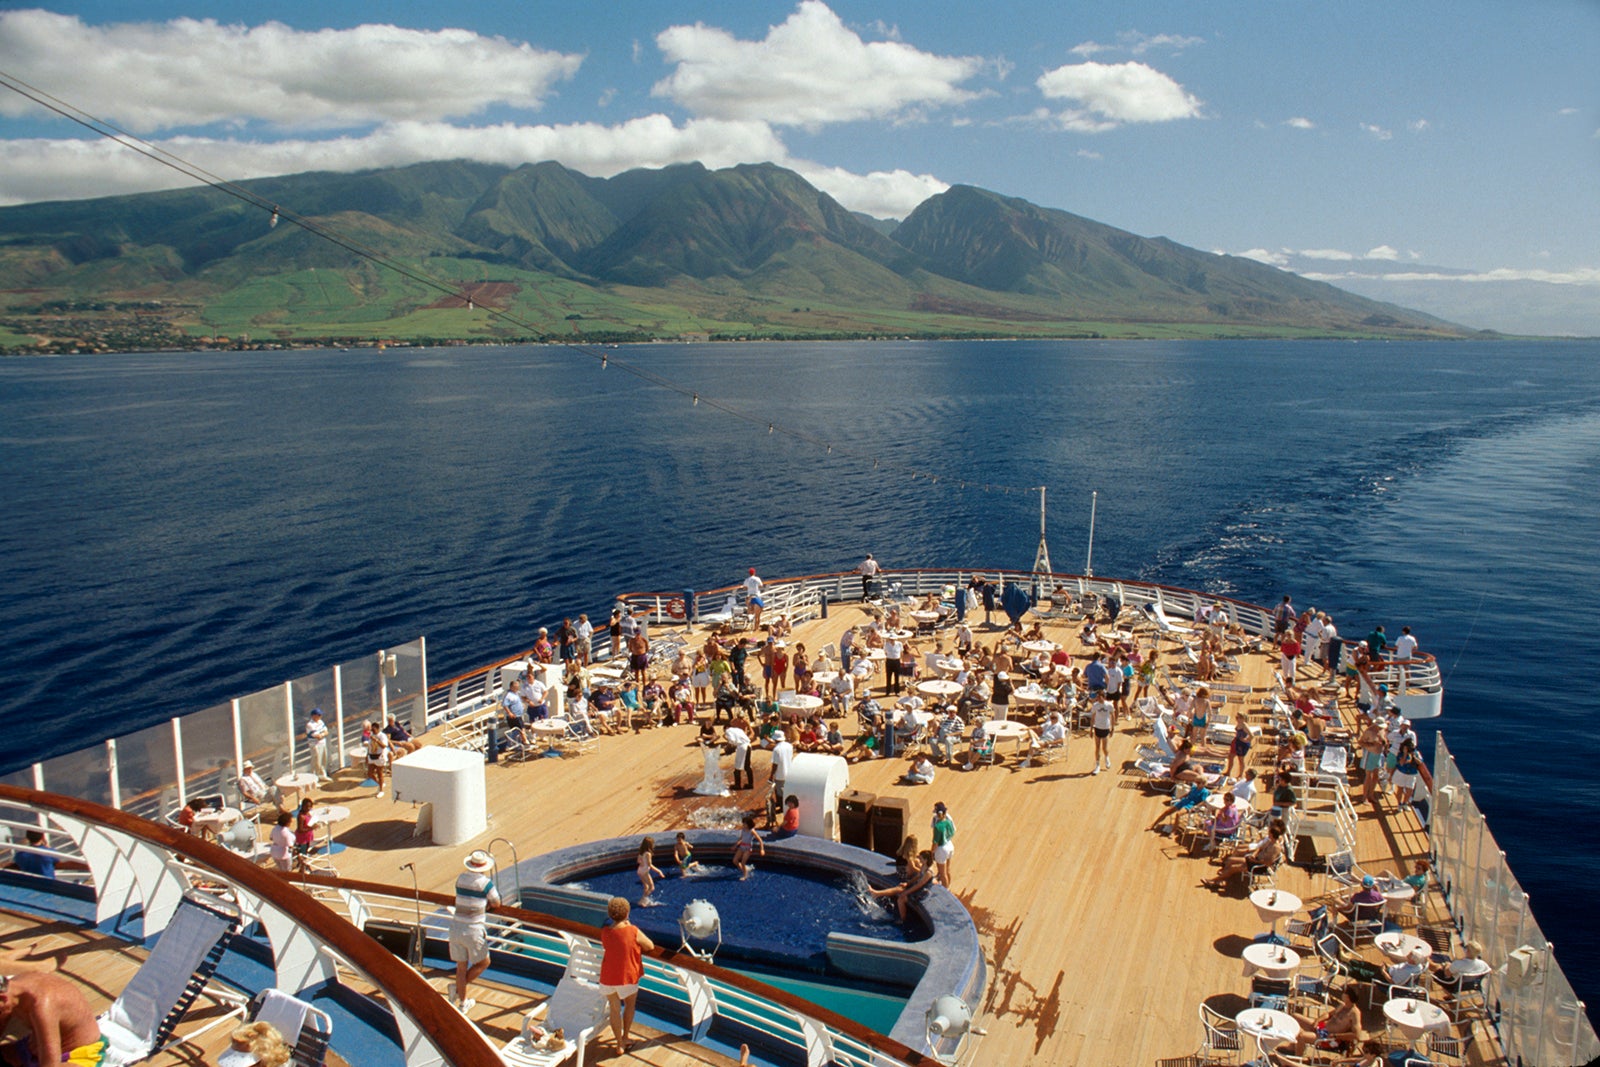 hawaii interisland cruises 2022